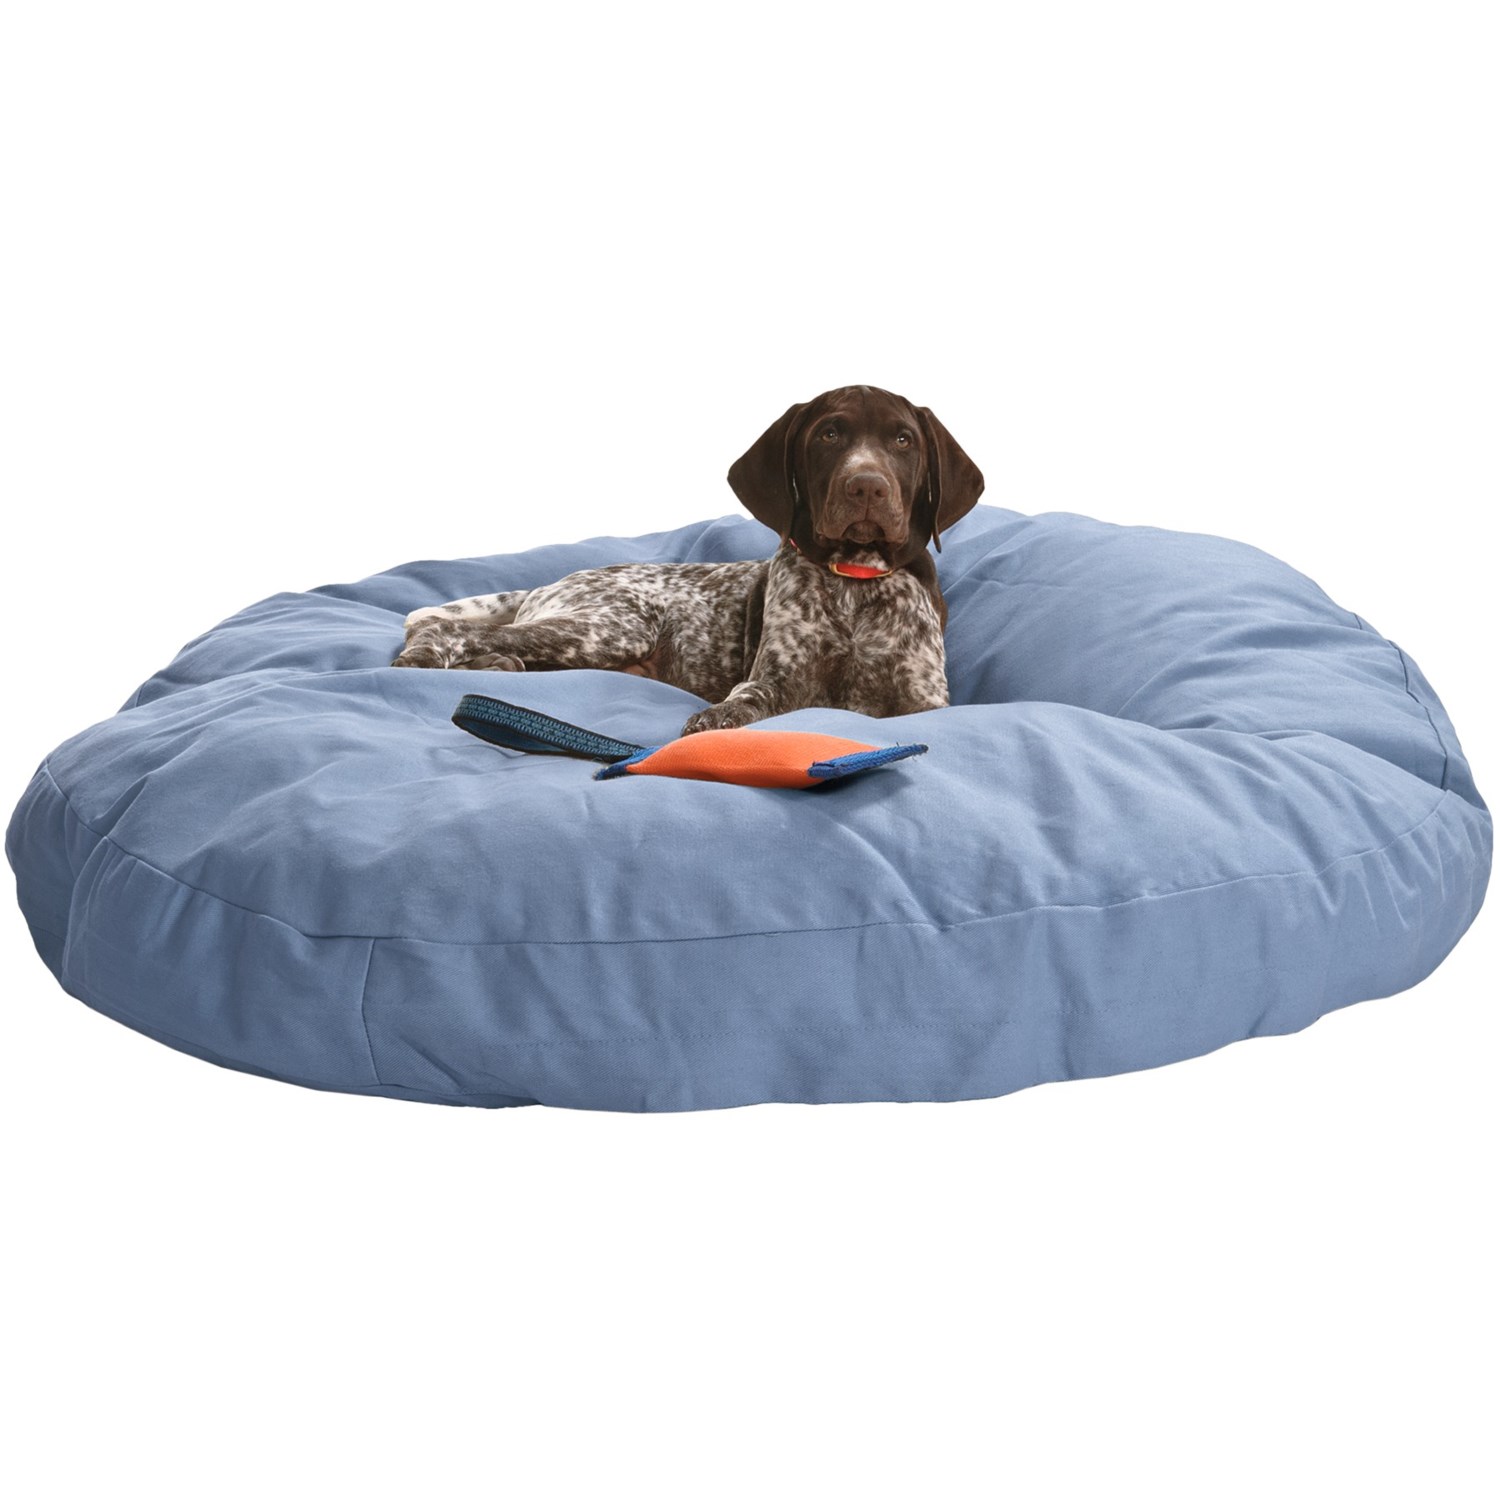 Kimlor Premium Quality Dog Bed - 40 